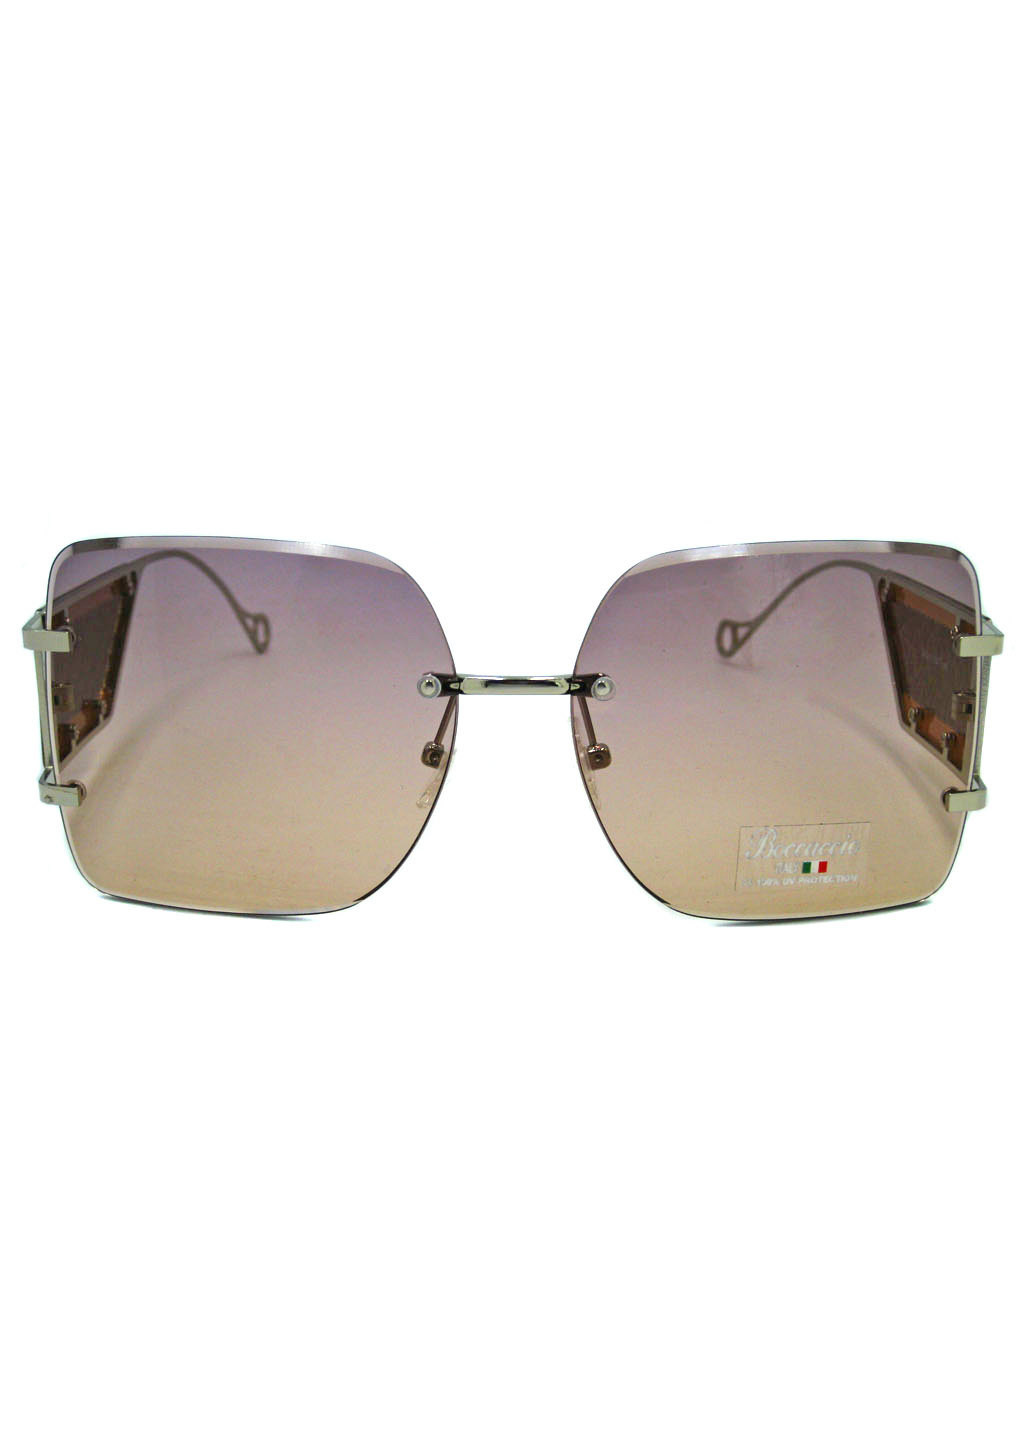 Сонцезахиснi окуляри Boccaccio bc2a530 (258724036)